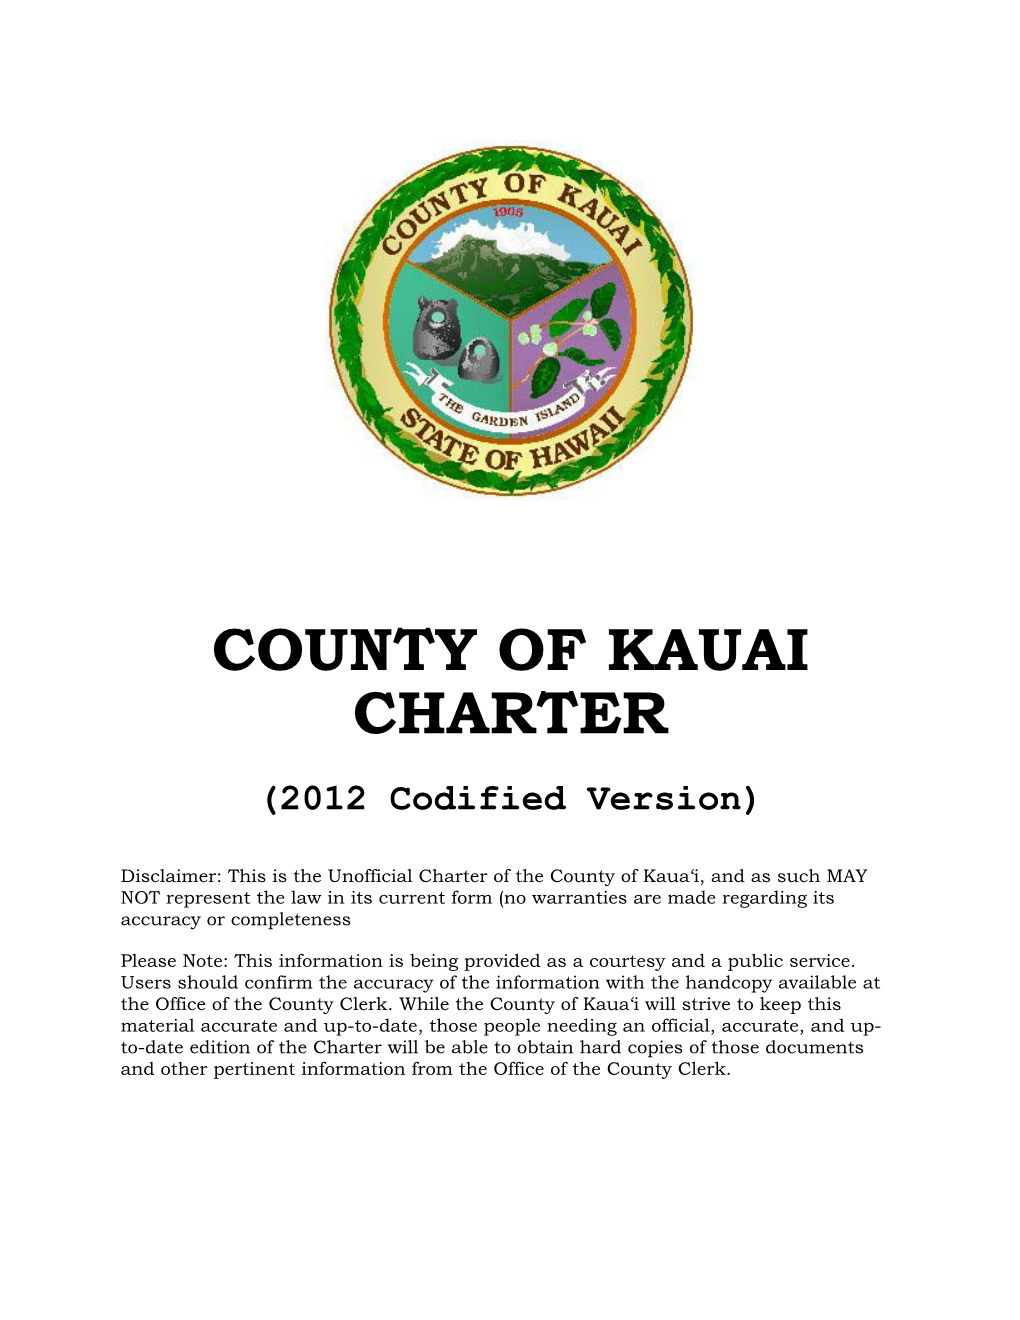 COUNTY of KAUAI CHARTER (2012 Codified Version)